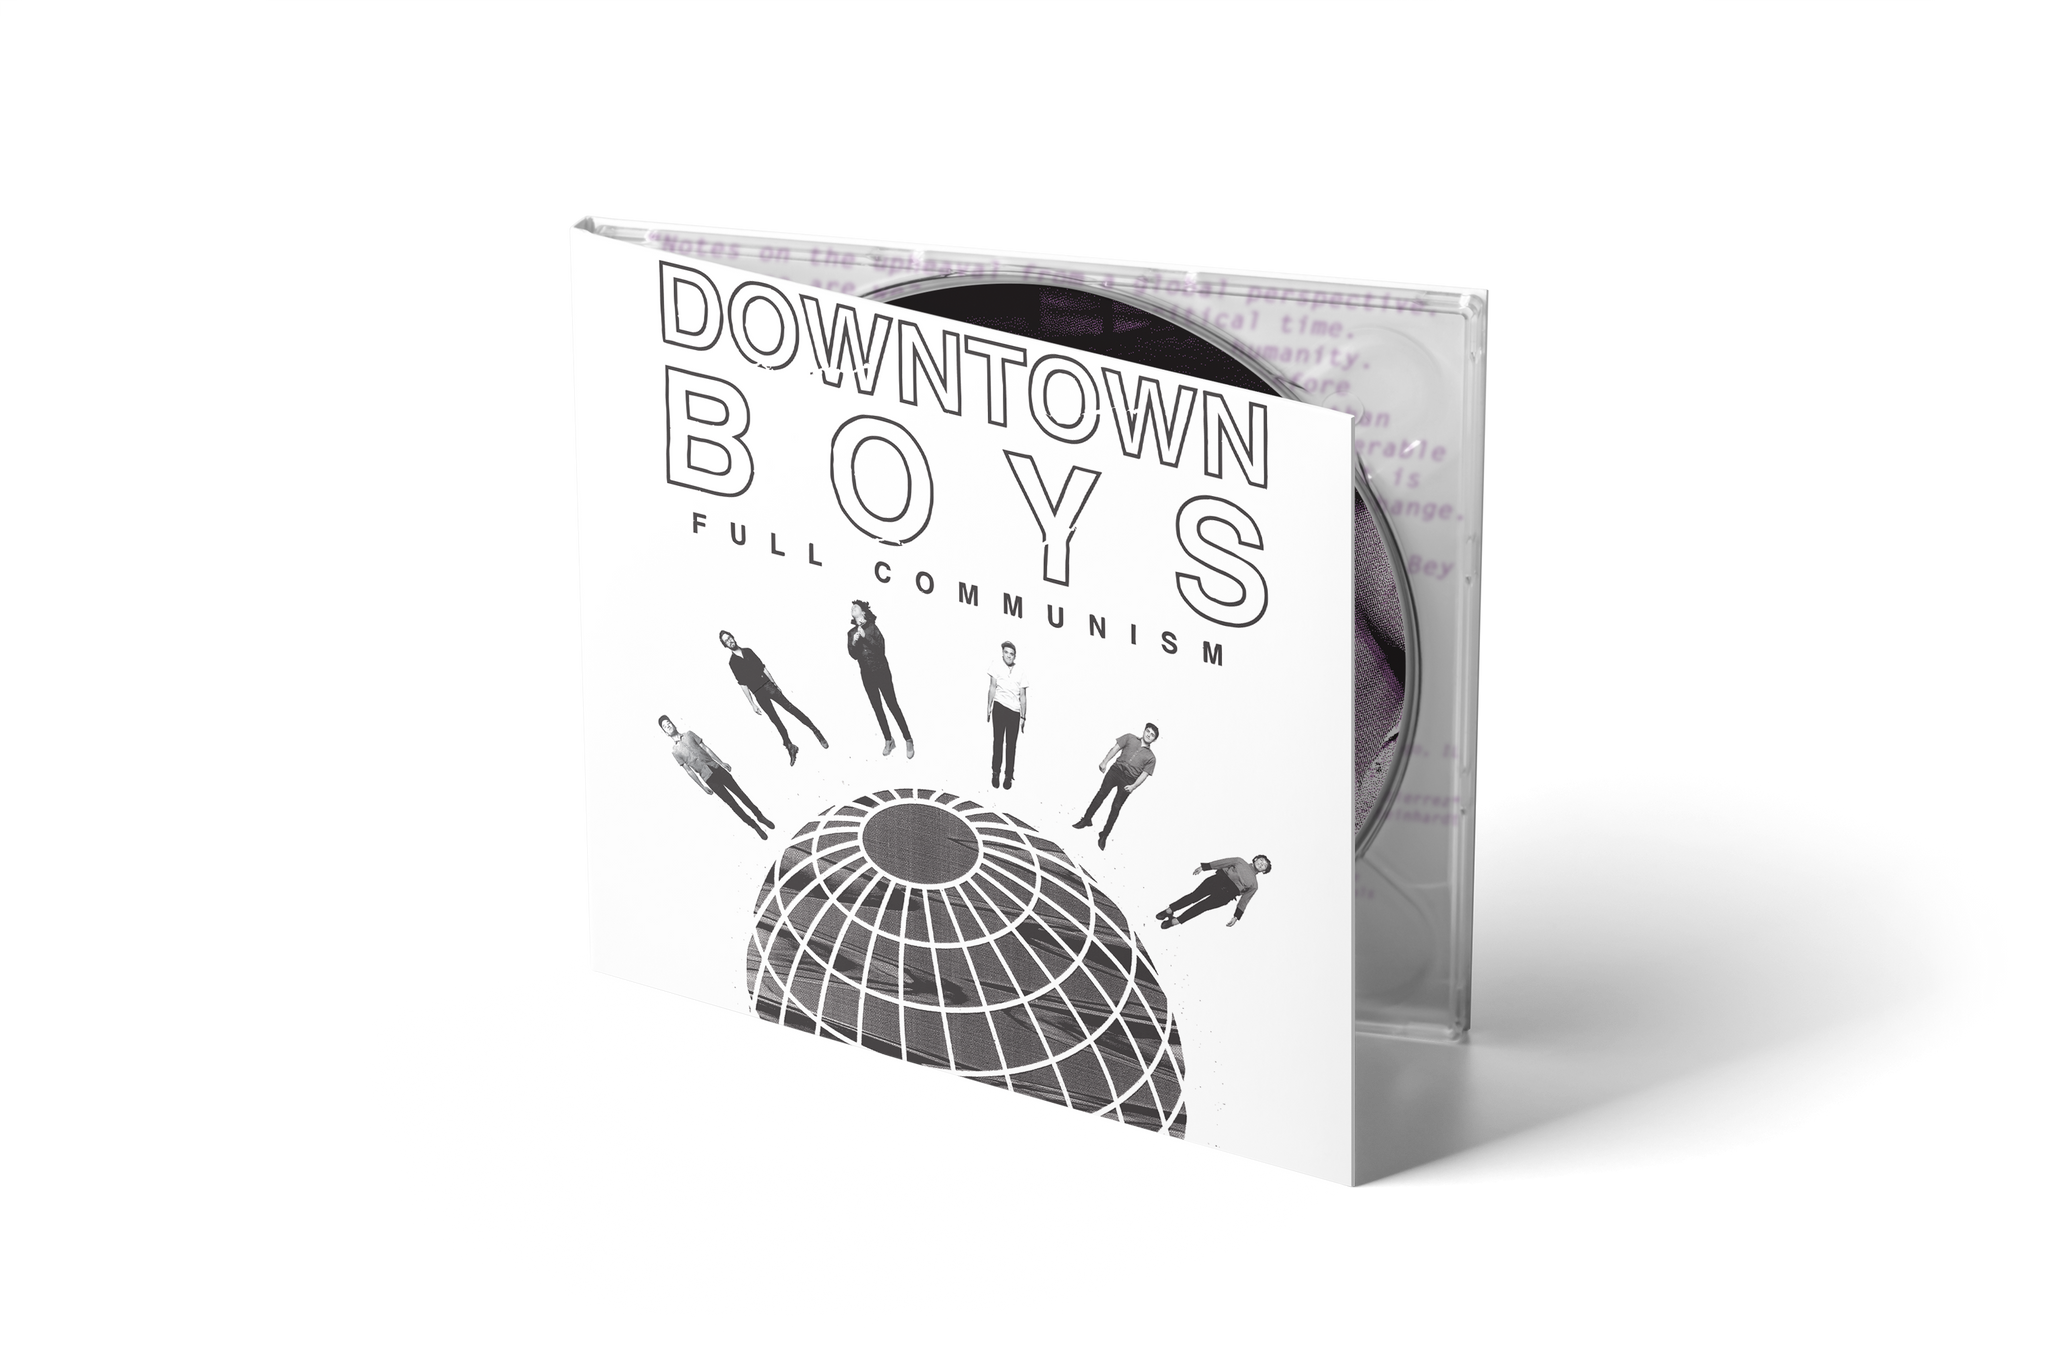 Downtown Boys "Full Communism" CD